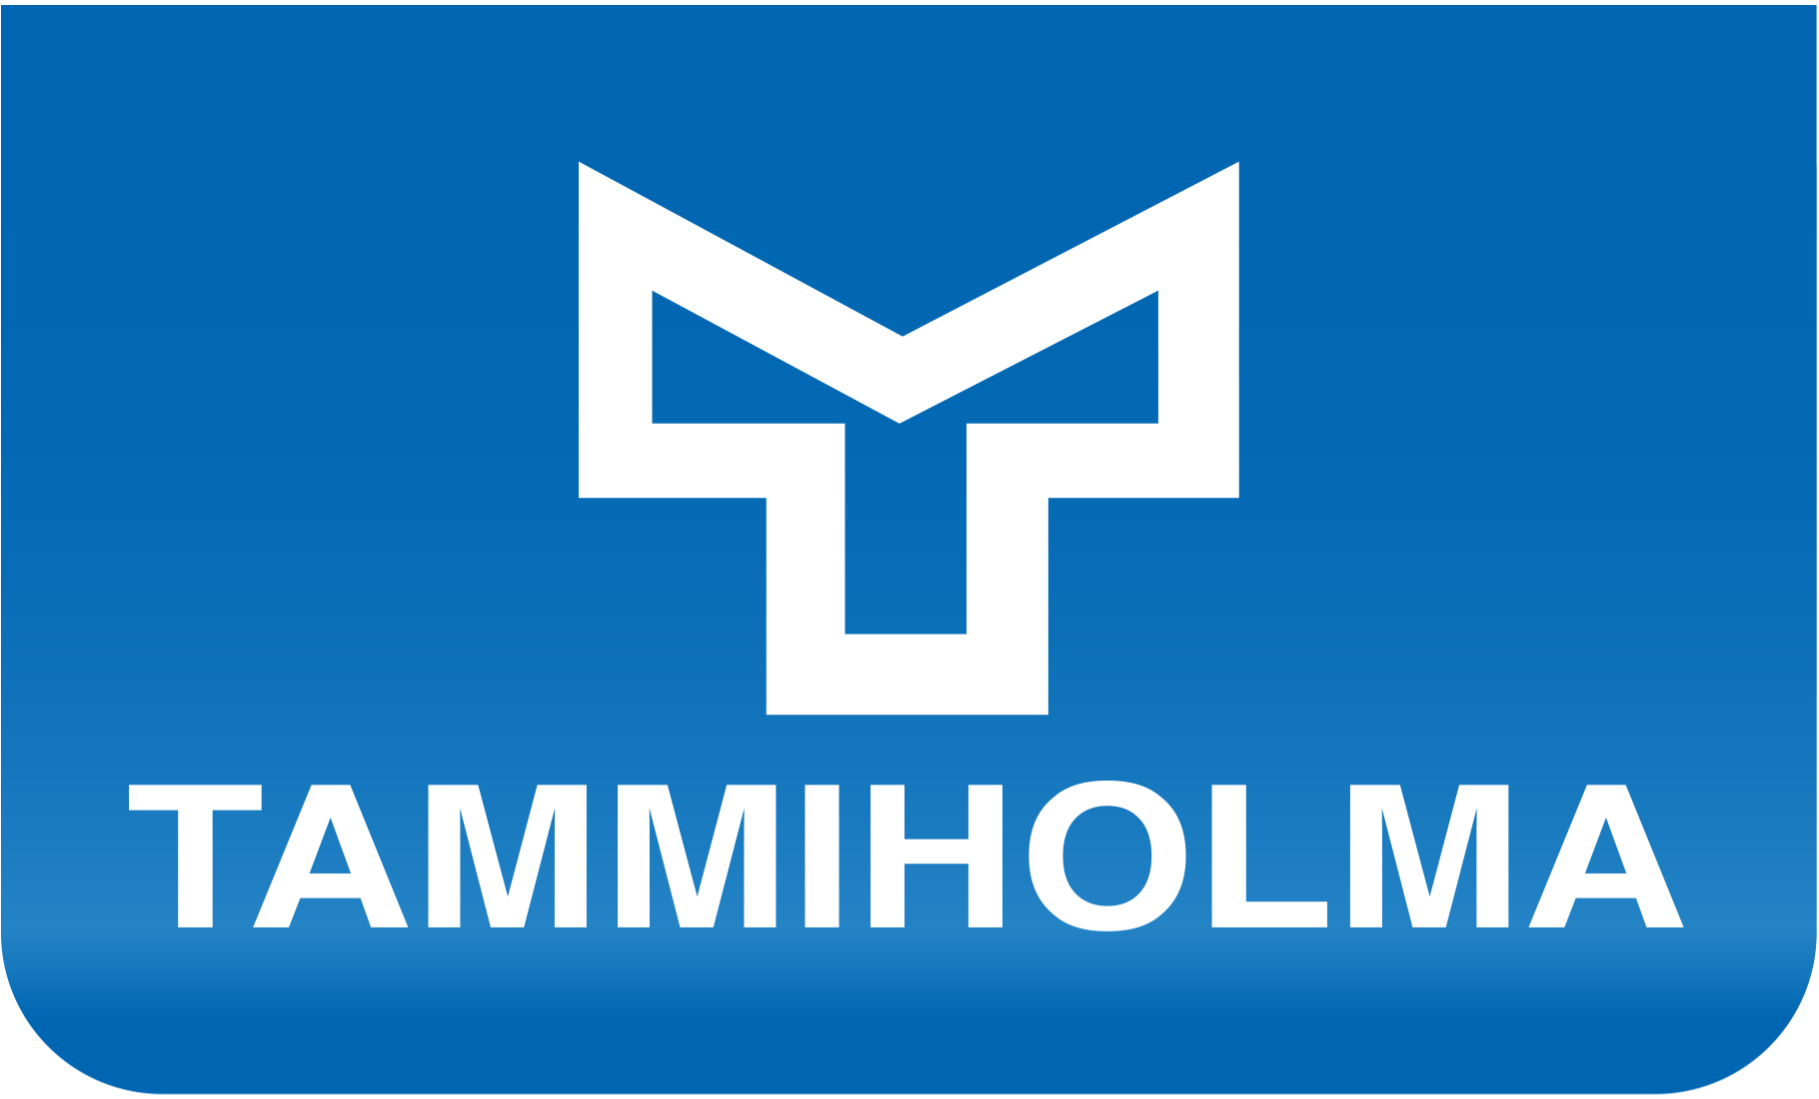 Tammiholma Oy